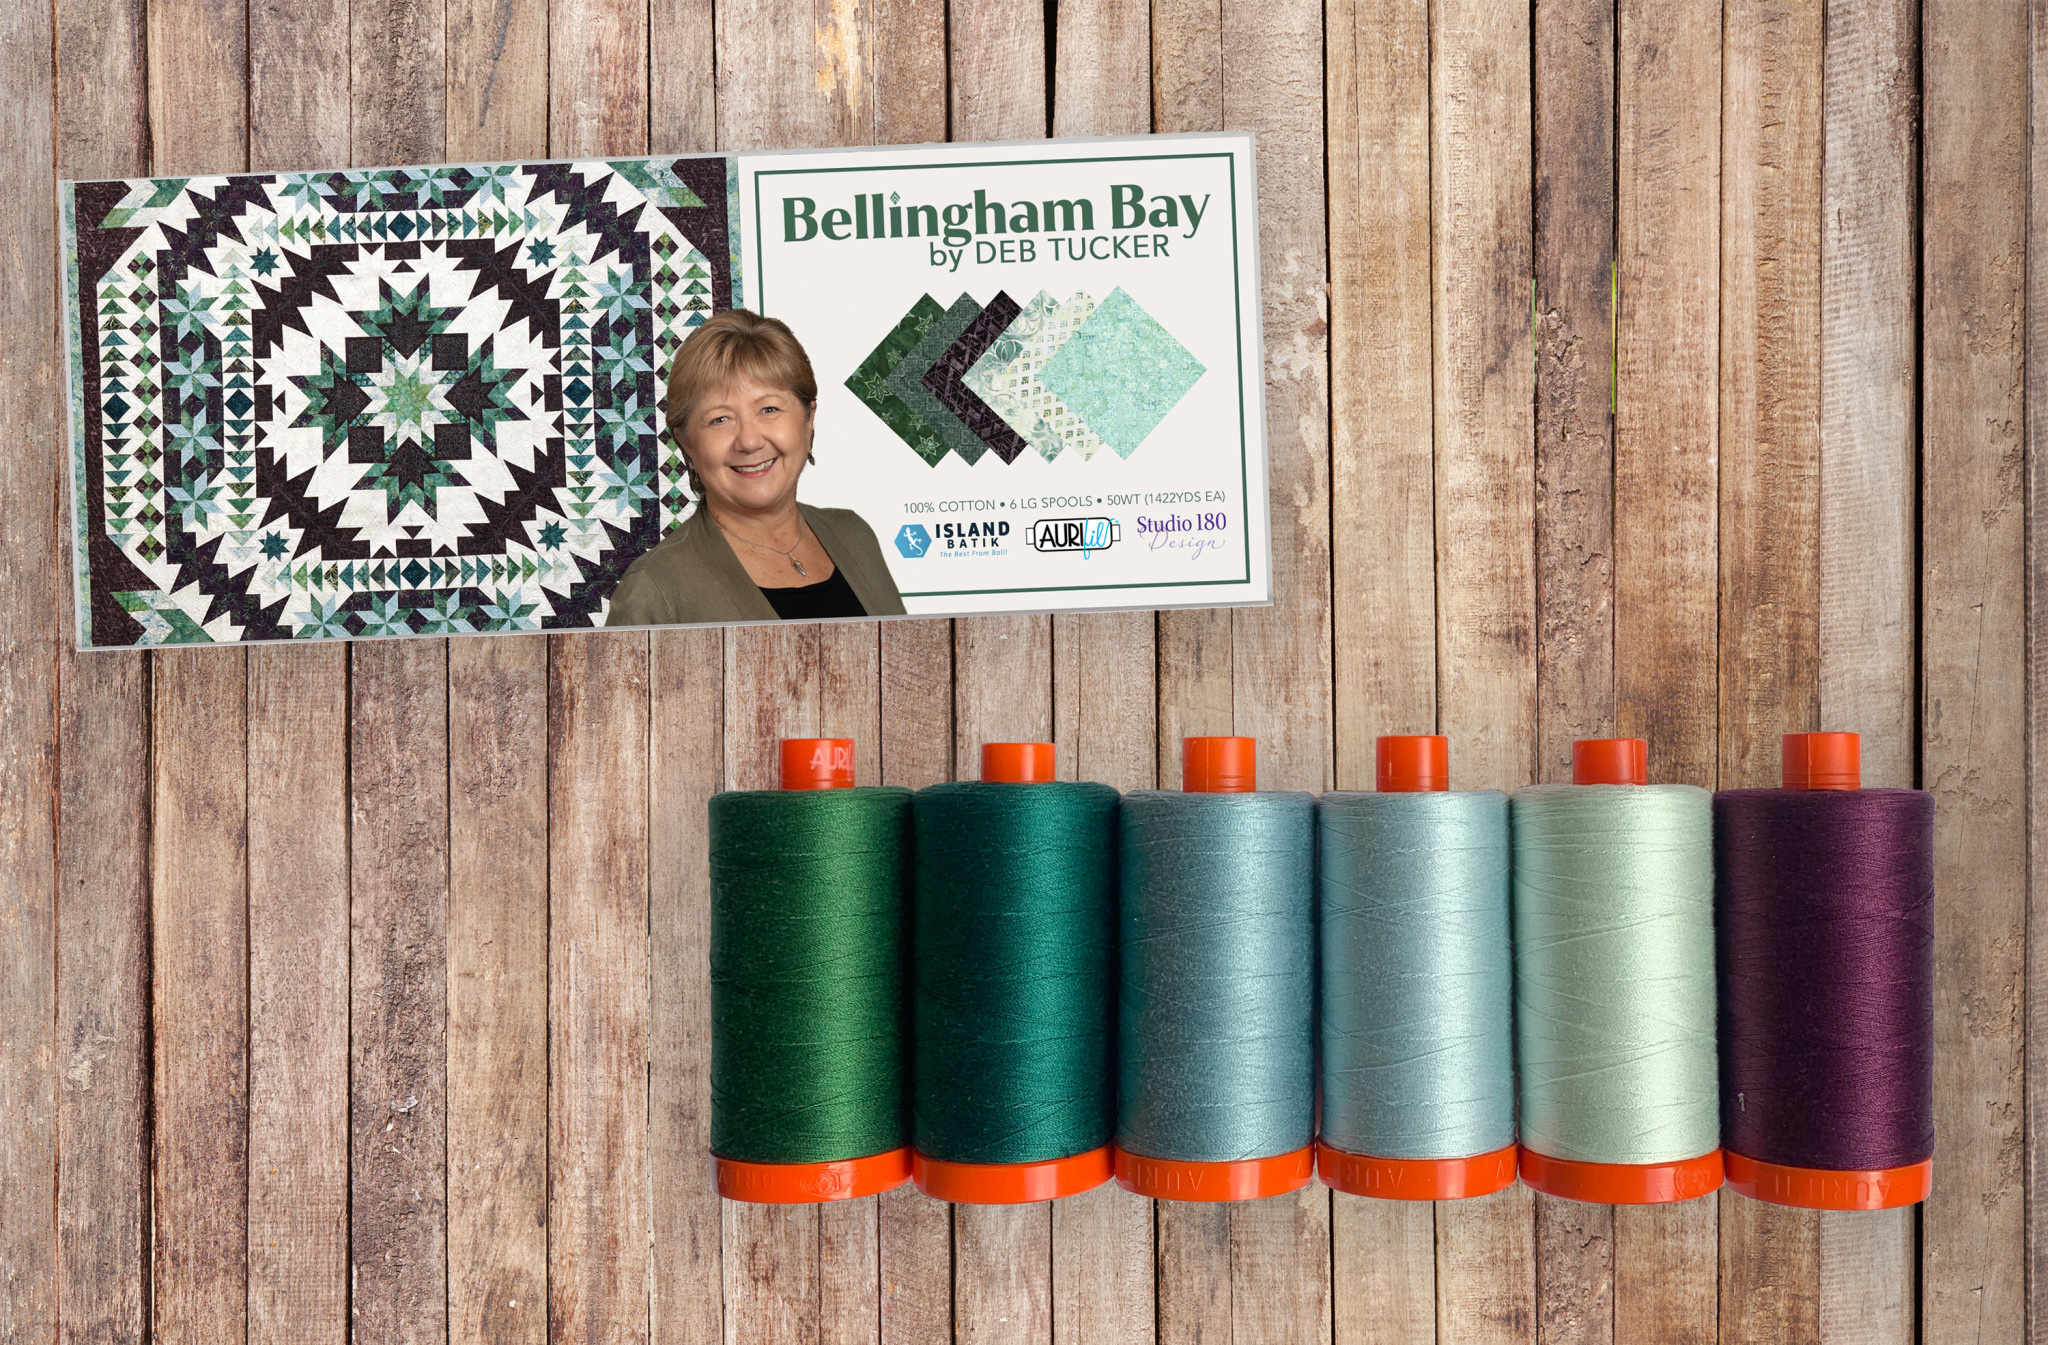 AURIFIL Bellingham Bay Thread Collection